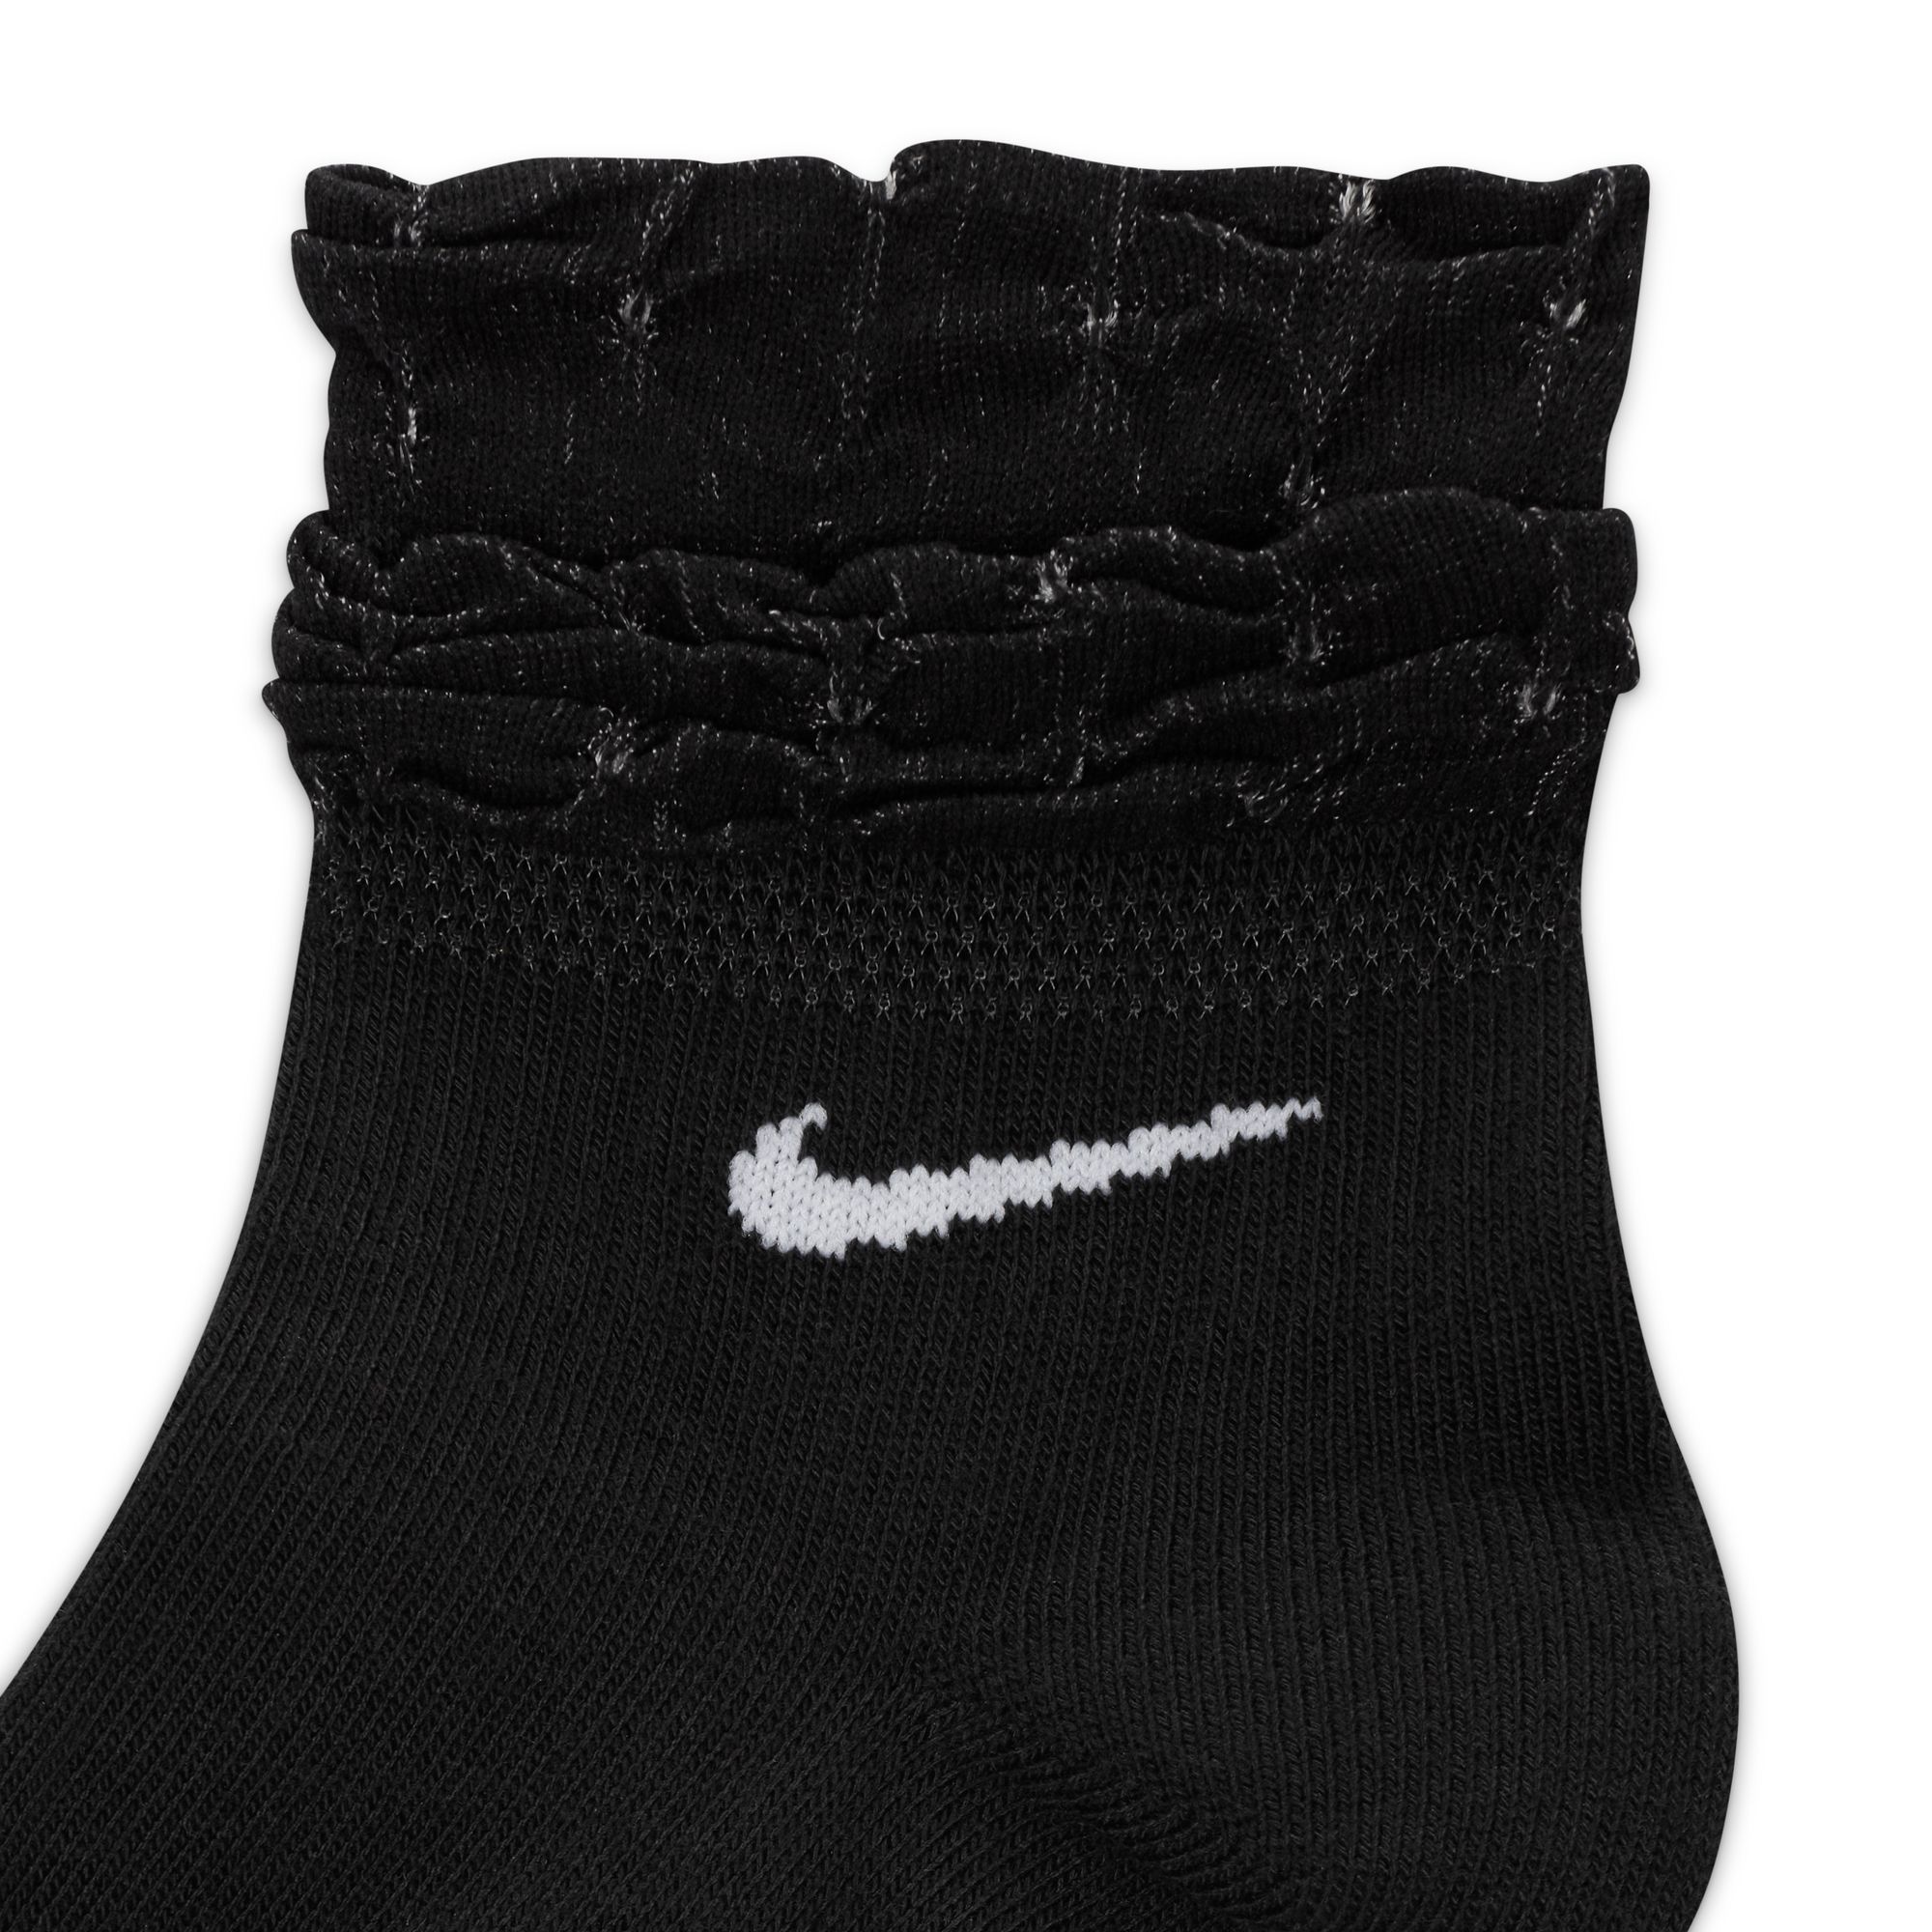 Nike Everyday Women's Socks White DH5485 - 100 - AKCESORIA NIKE